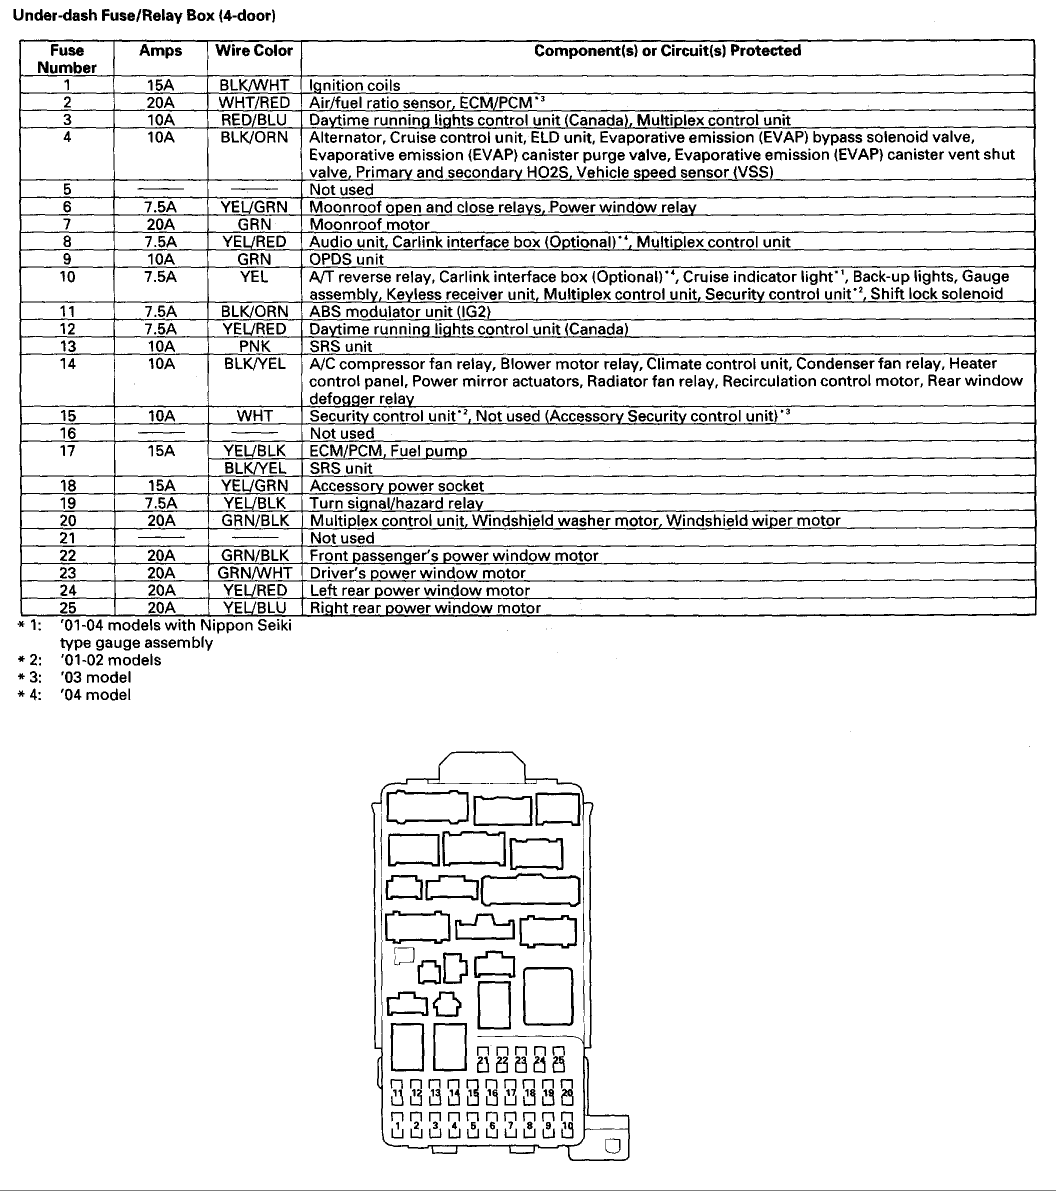 2002 Ford Focu Zx3 Fuse Box Diagram - Cars Wiring Diagram